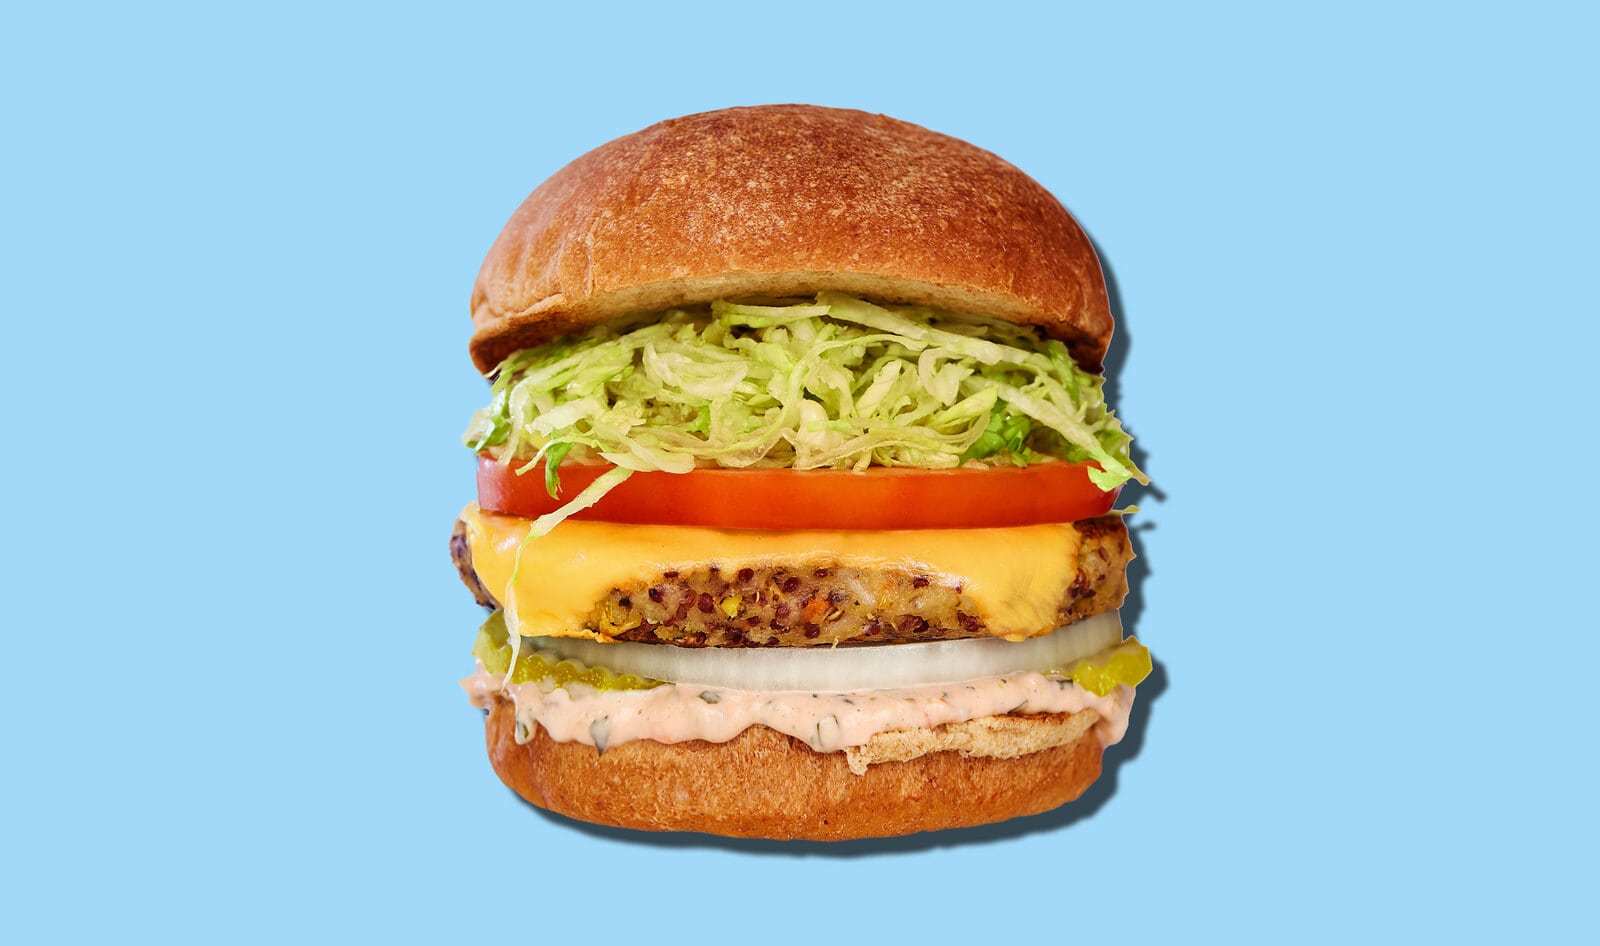 California Chain Burger Lounge Debuts Its First Vegan Cheeseburger&nbsp;